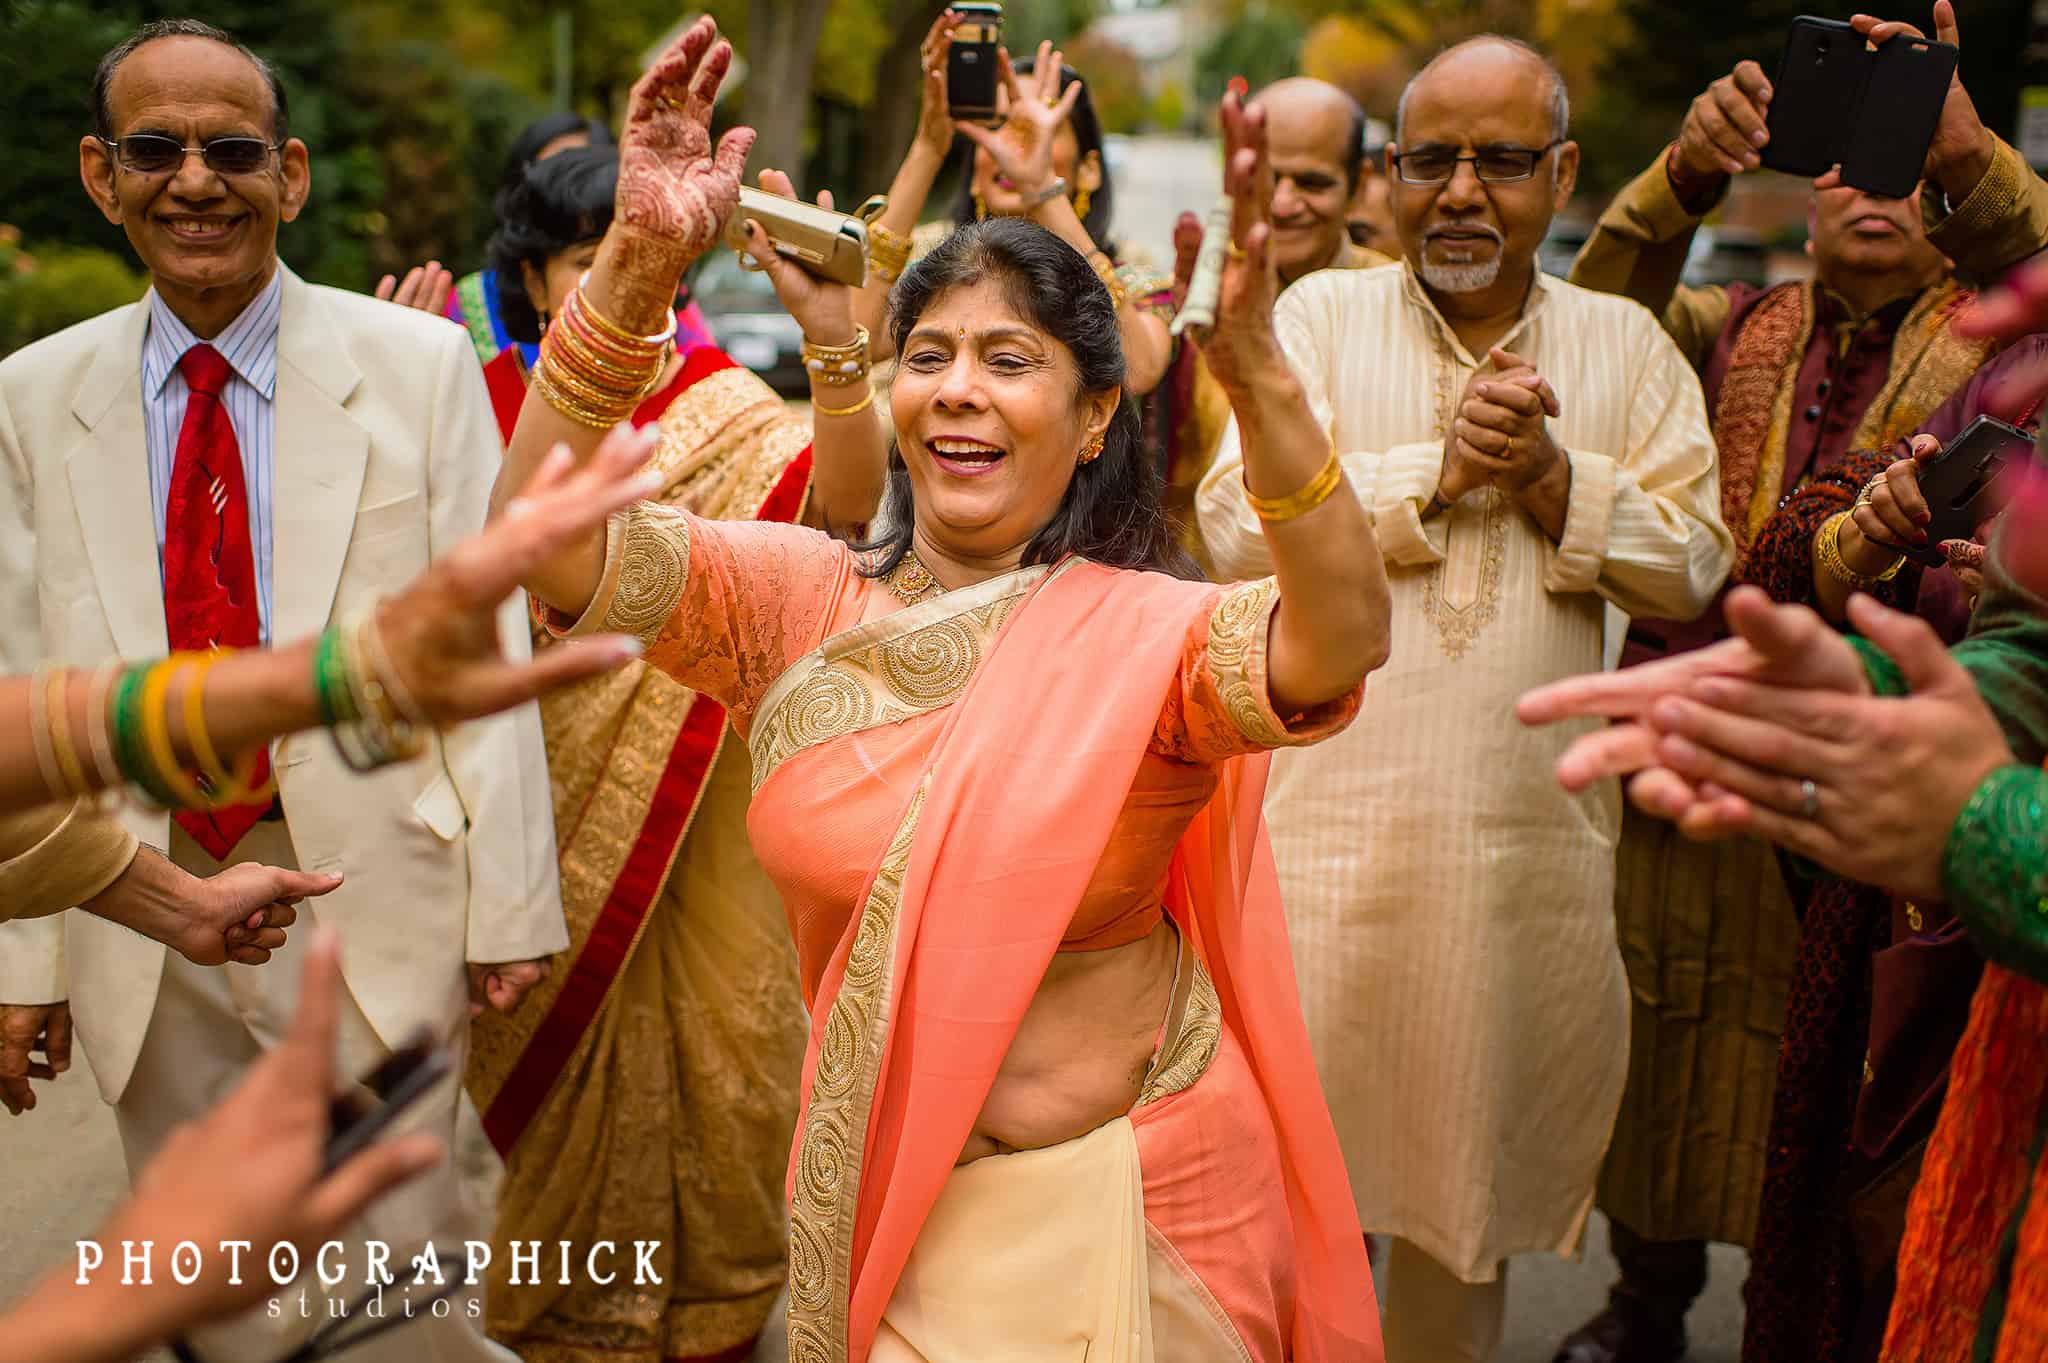 Omni Shoreham Indian Wedding, Omni Shoreham Indian Wedding: Rashi + Sandeep